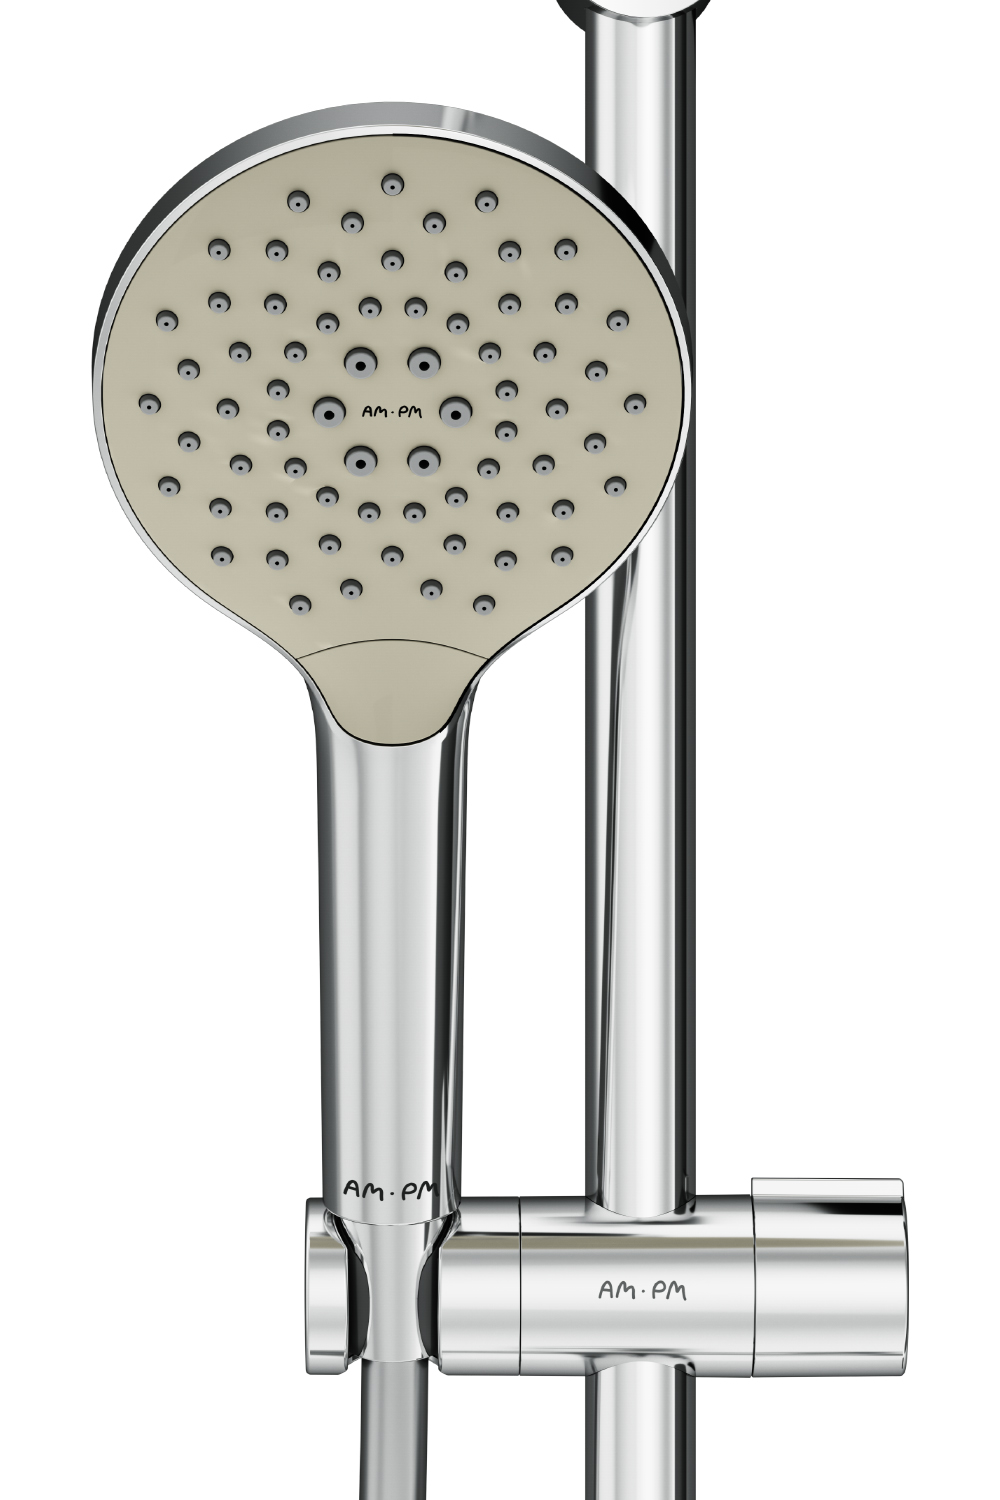 F0780964 Like,душ.система,набор:см-ль д/ванны/душа,верхний душ d250 мм, ручной душ 120 мм, 3 функции